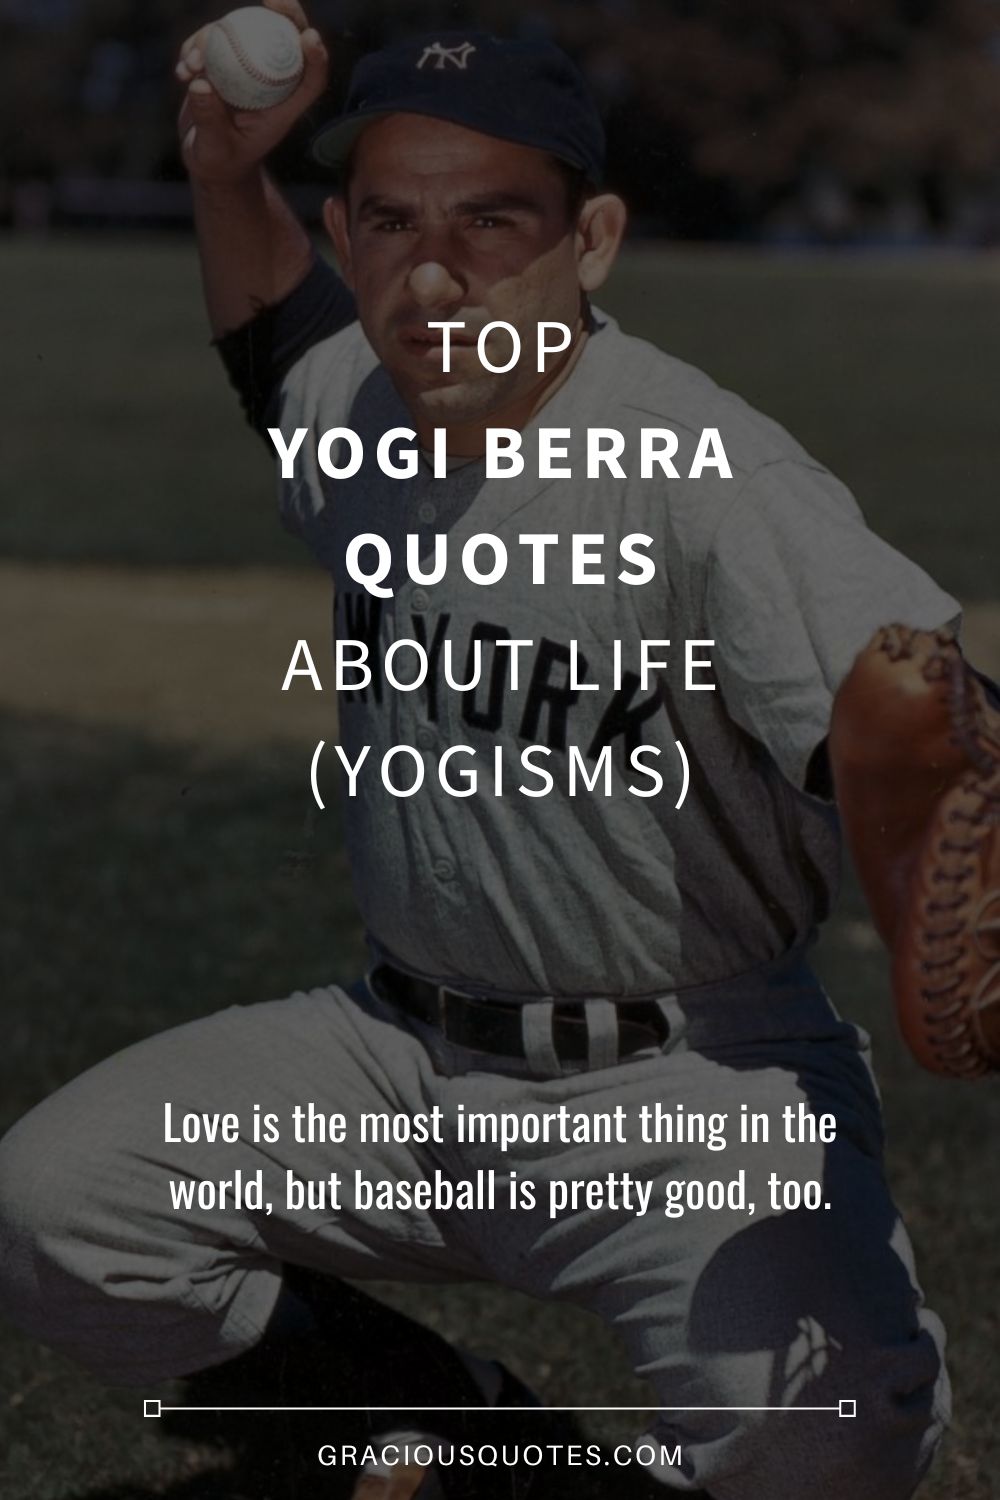 Top Yogi Berra Quotes About Life (YOGISMS) - Gracious Quotes